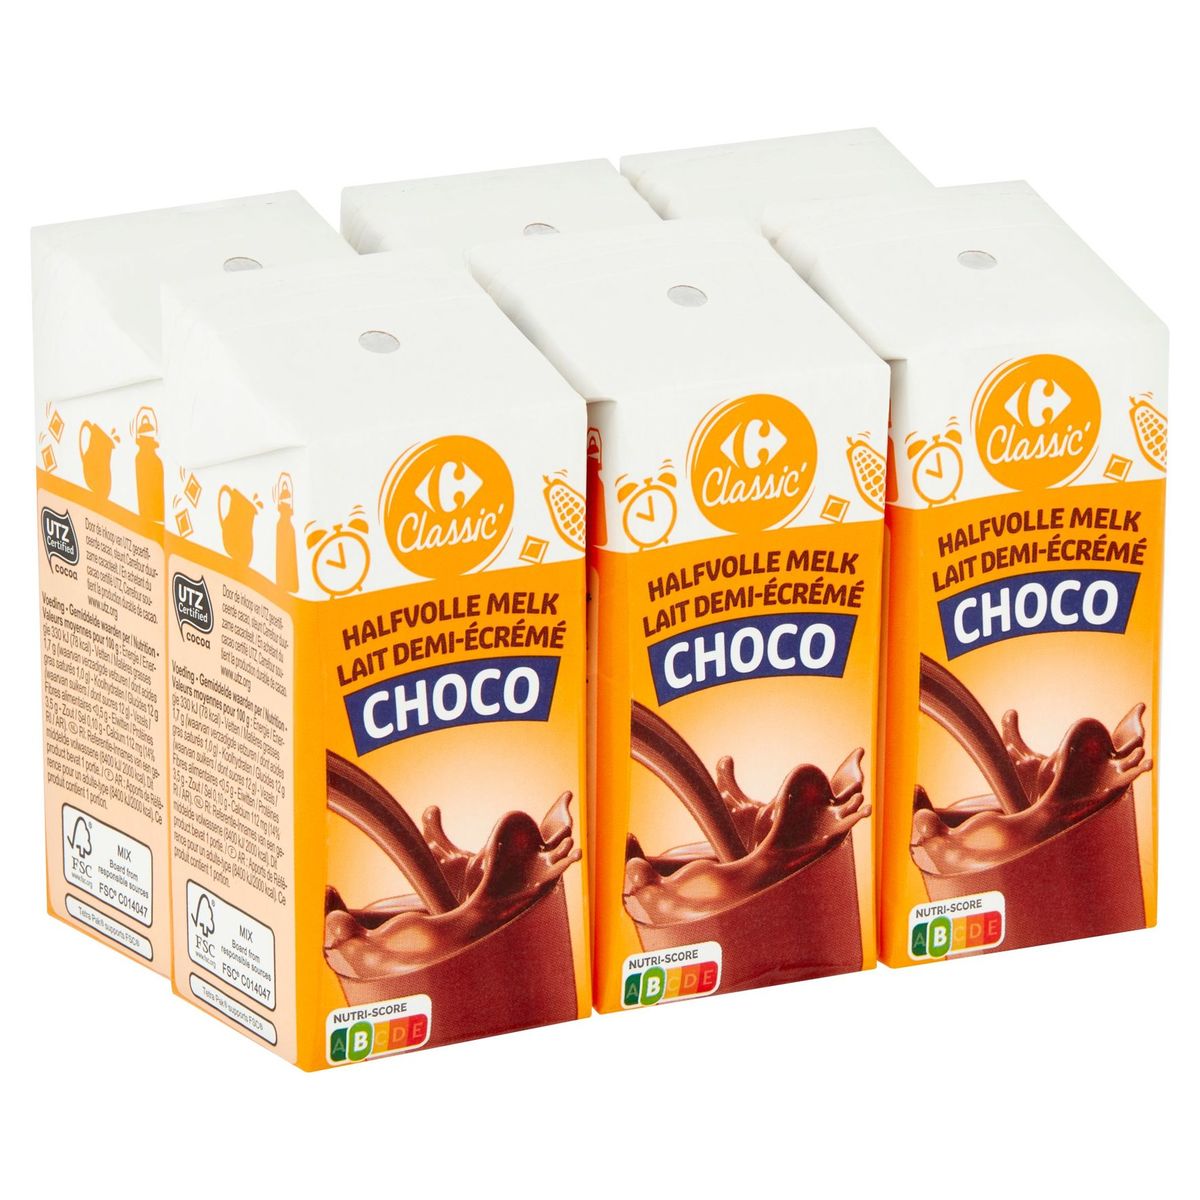 Carrefour Classic' Halfvolle Melk Choco 6 x 200 ml